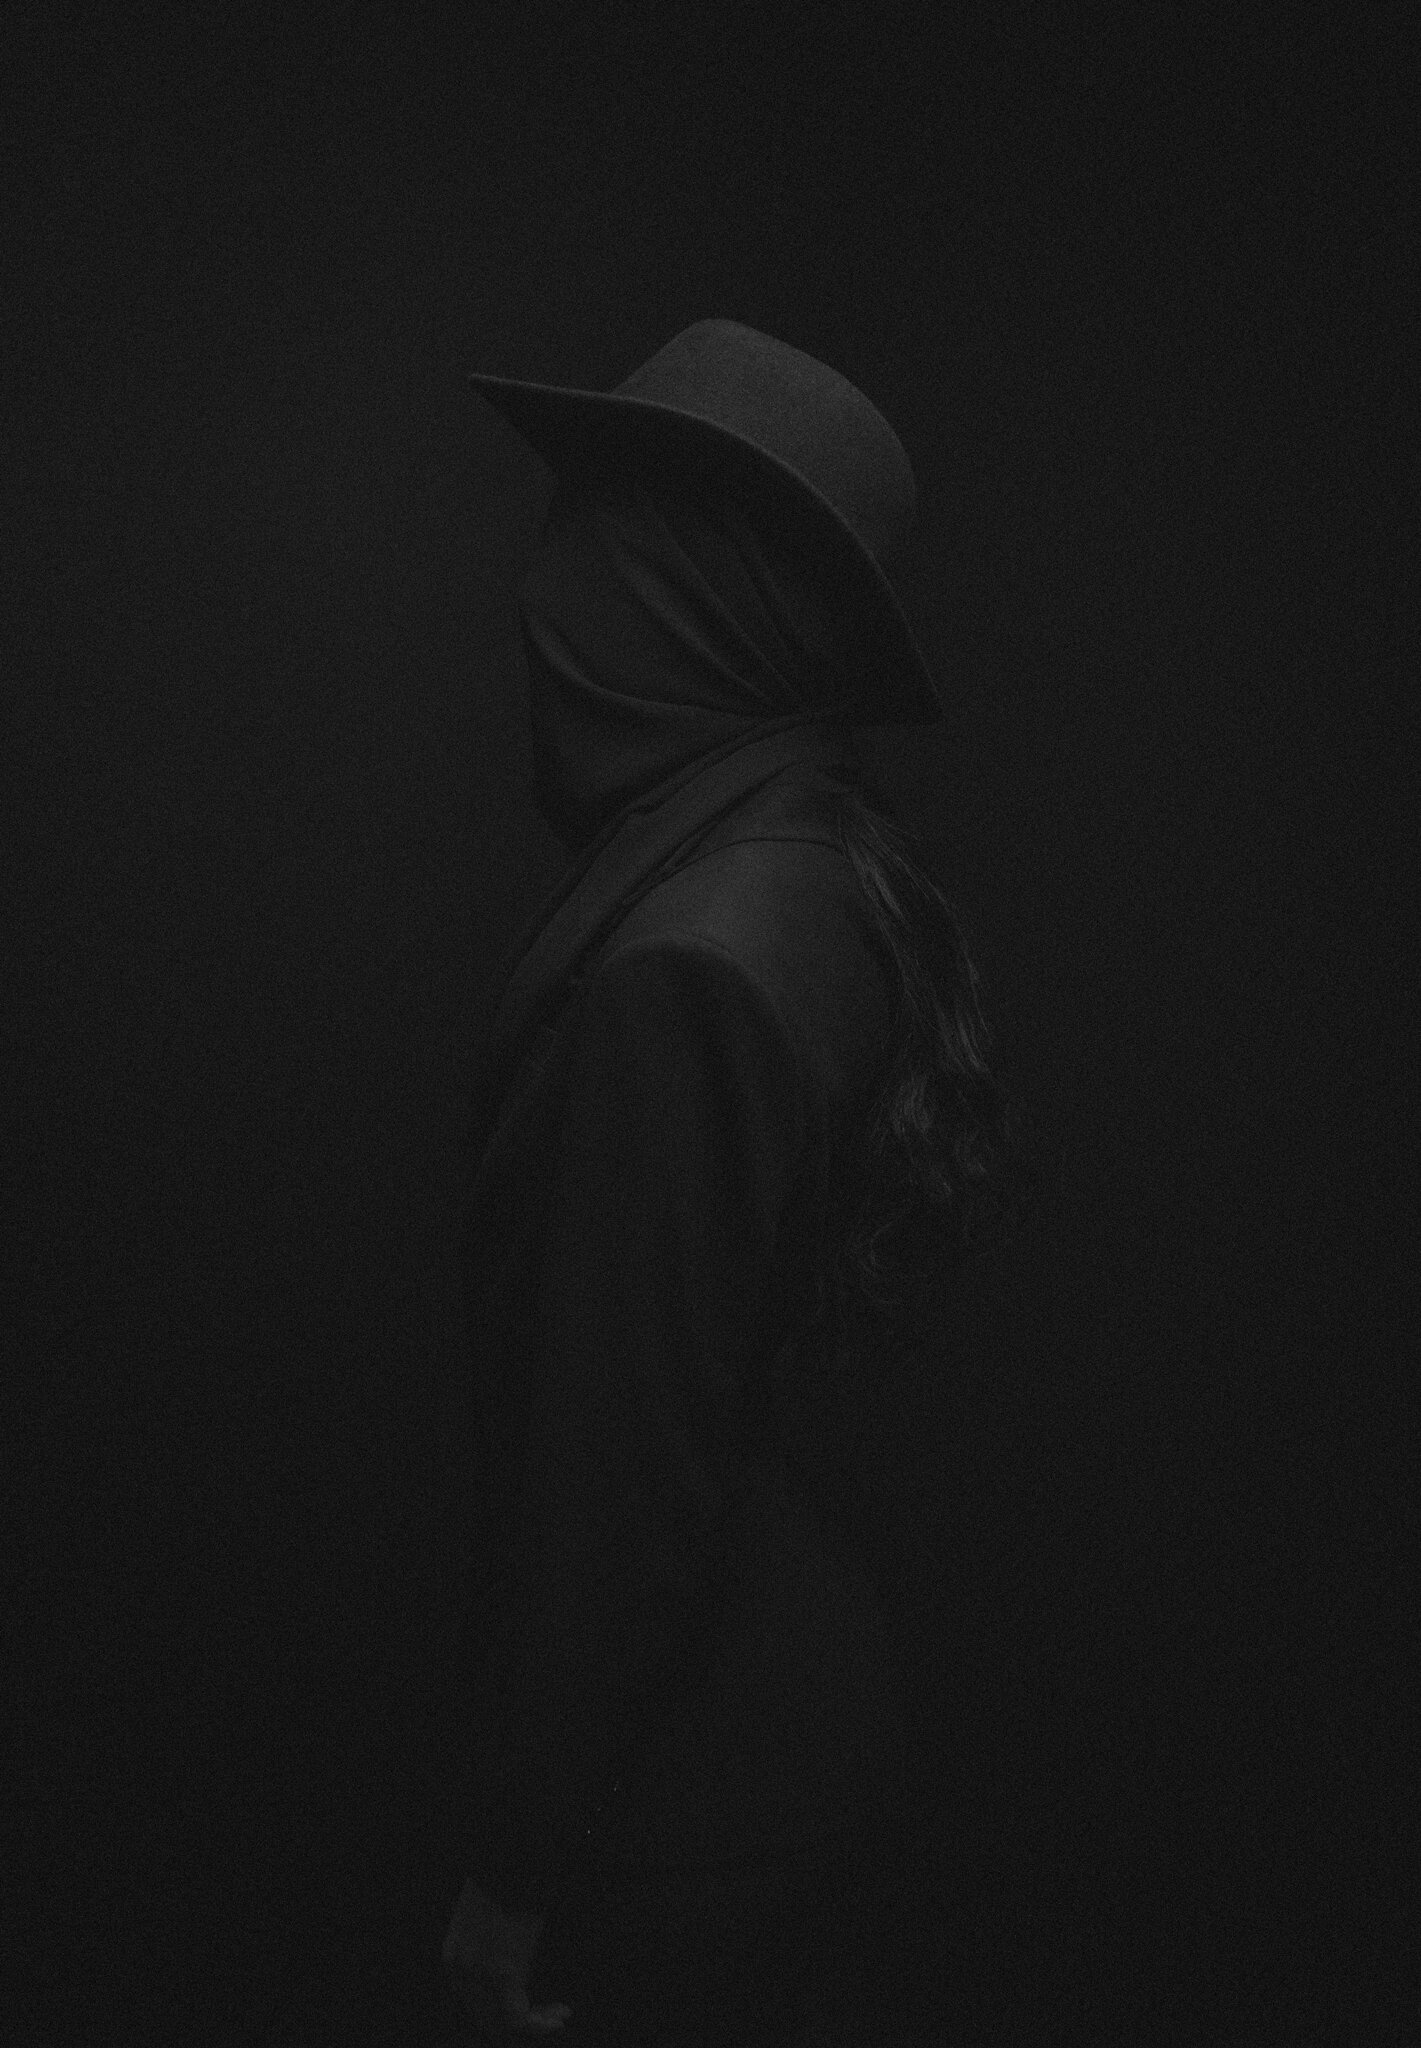 Olga-Tenyanin-Portrait-Photographer-Portland-Oregon-Vancouver-Washington-Spooky-shroud-hat-portrait-eerie-6.jpg